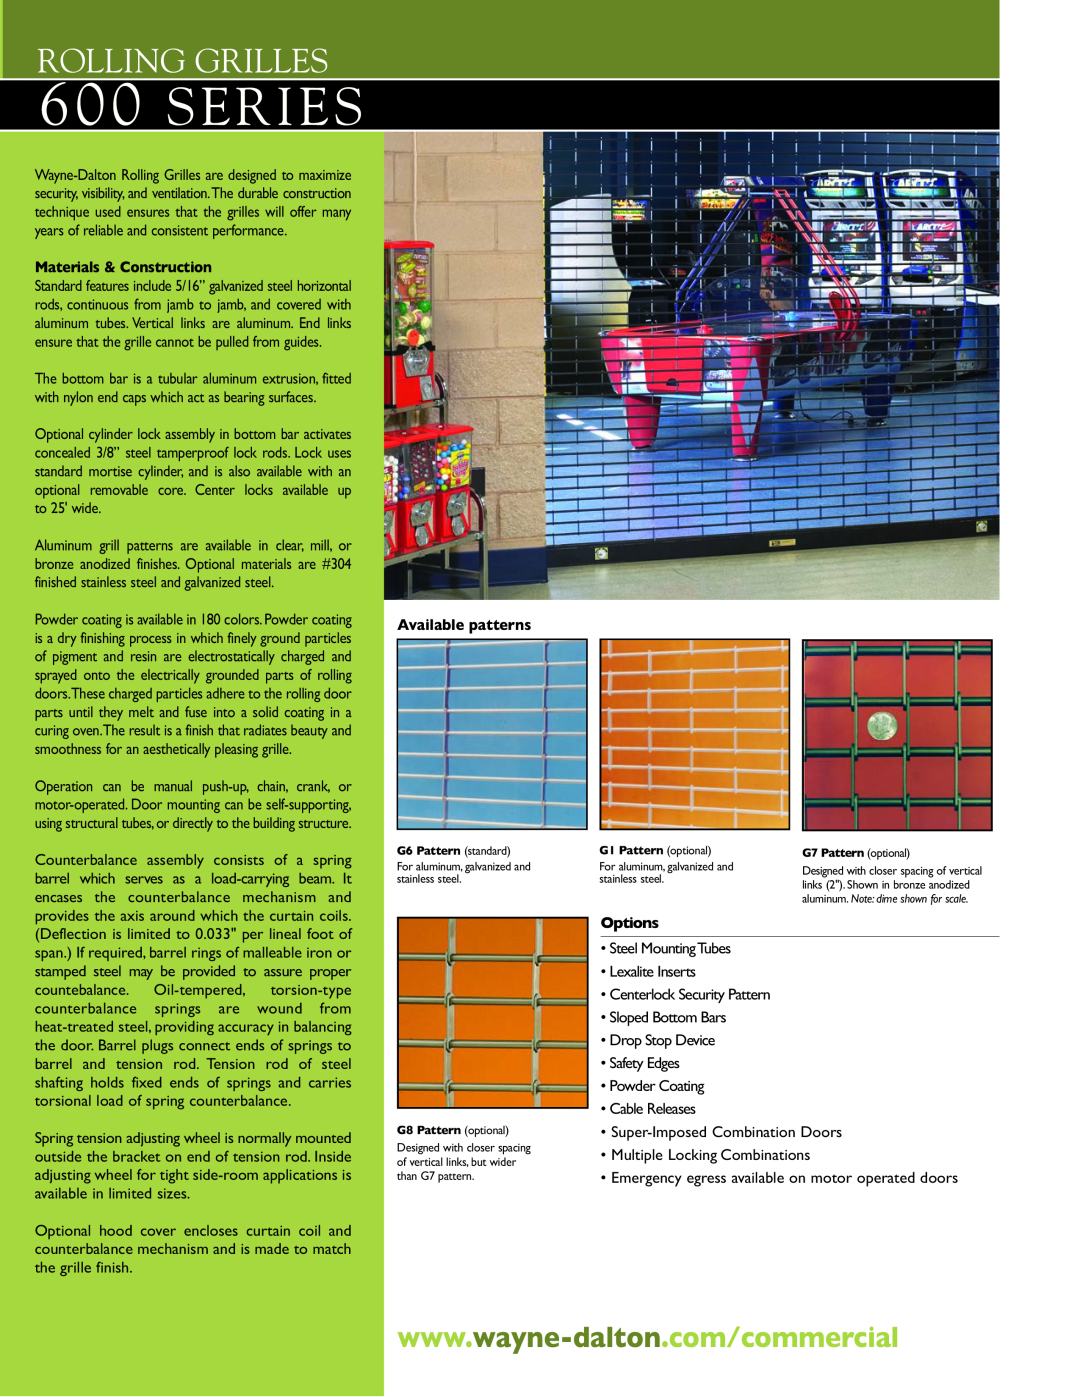 Wayne-Dalton 600 manual 6 0 0 S E R I E S, Rolling Grilles, Materials & Construction, Available patterns, Options 